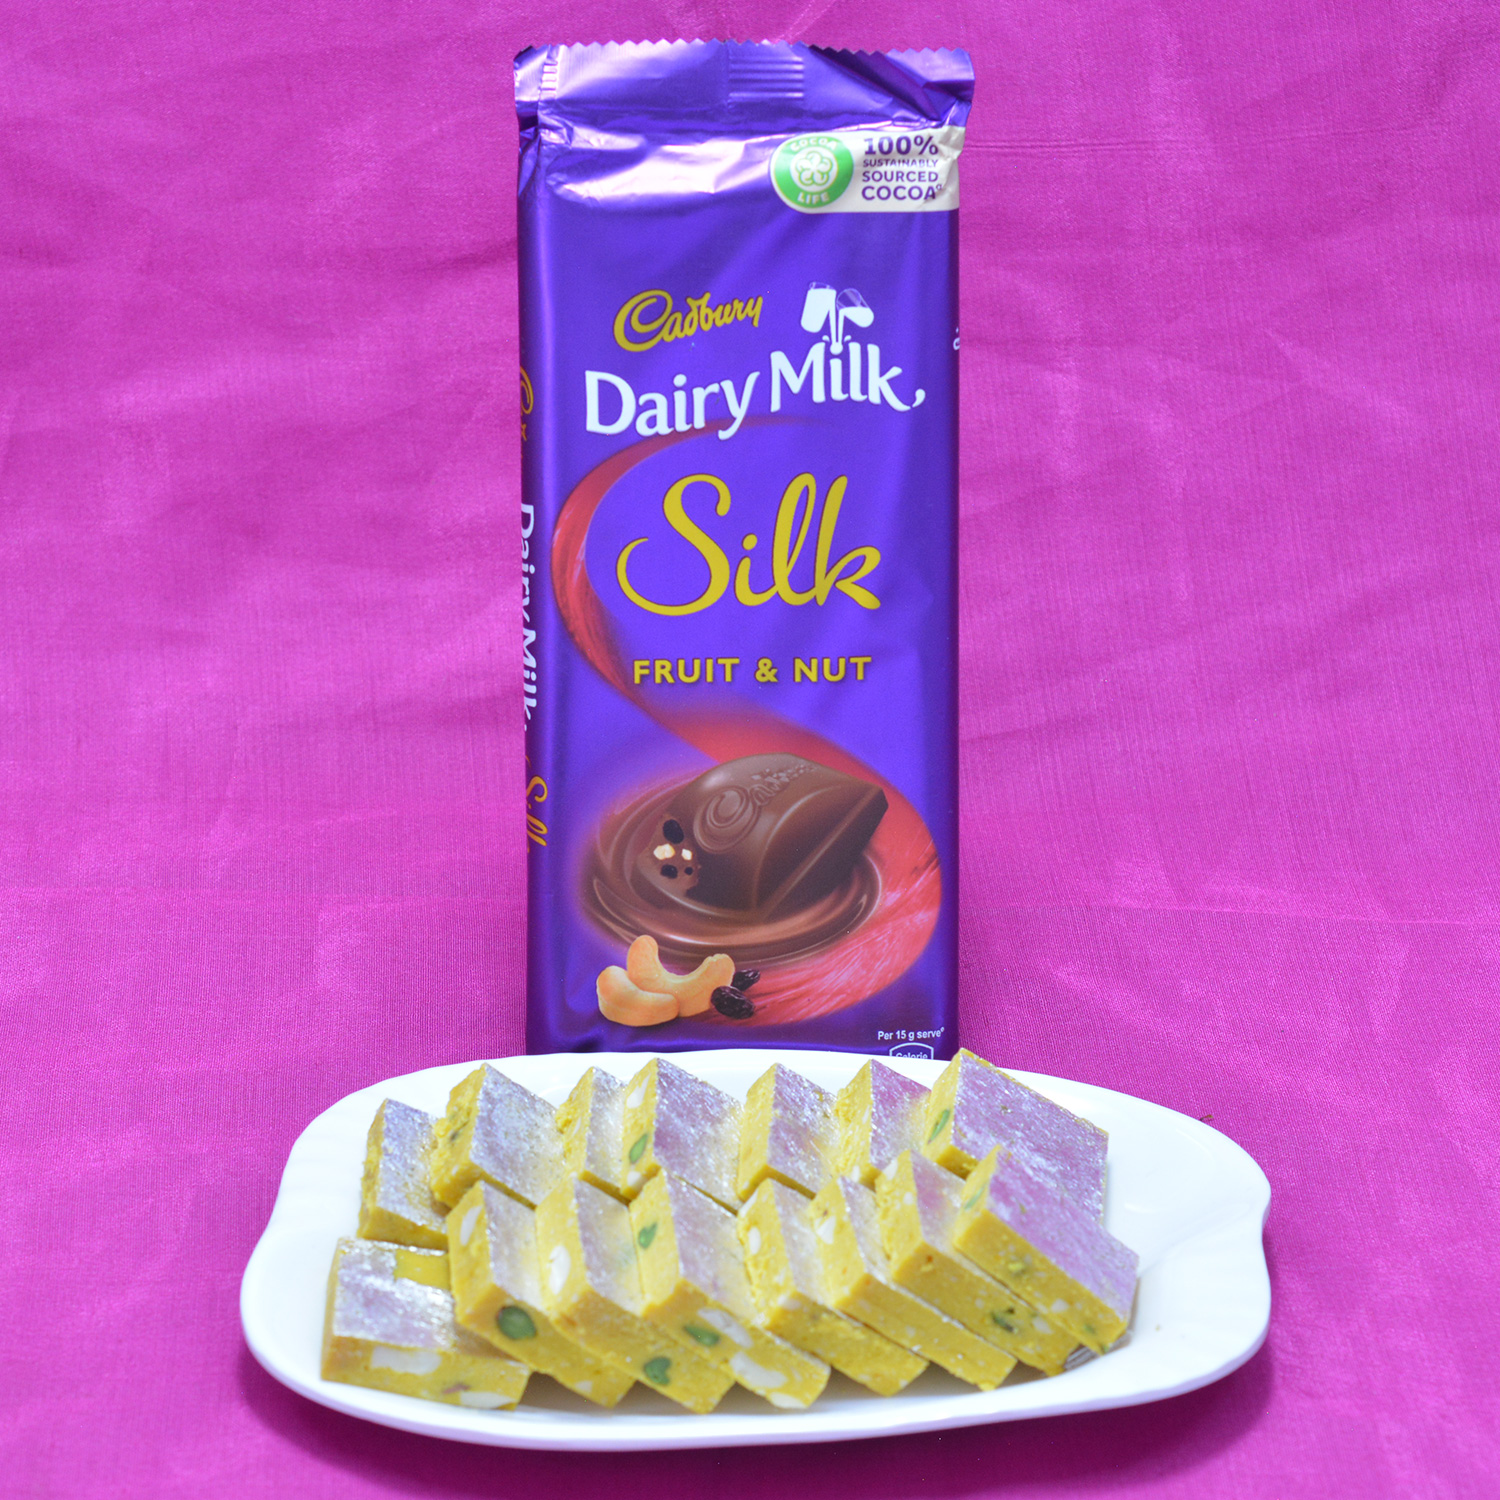 Mouthwatering Kaju Kesar Pista Barfi with Finger Licking Cadbury Dairy Milk Silk Chocolate Hamper